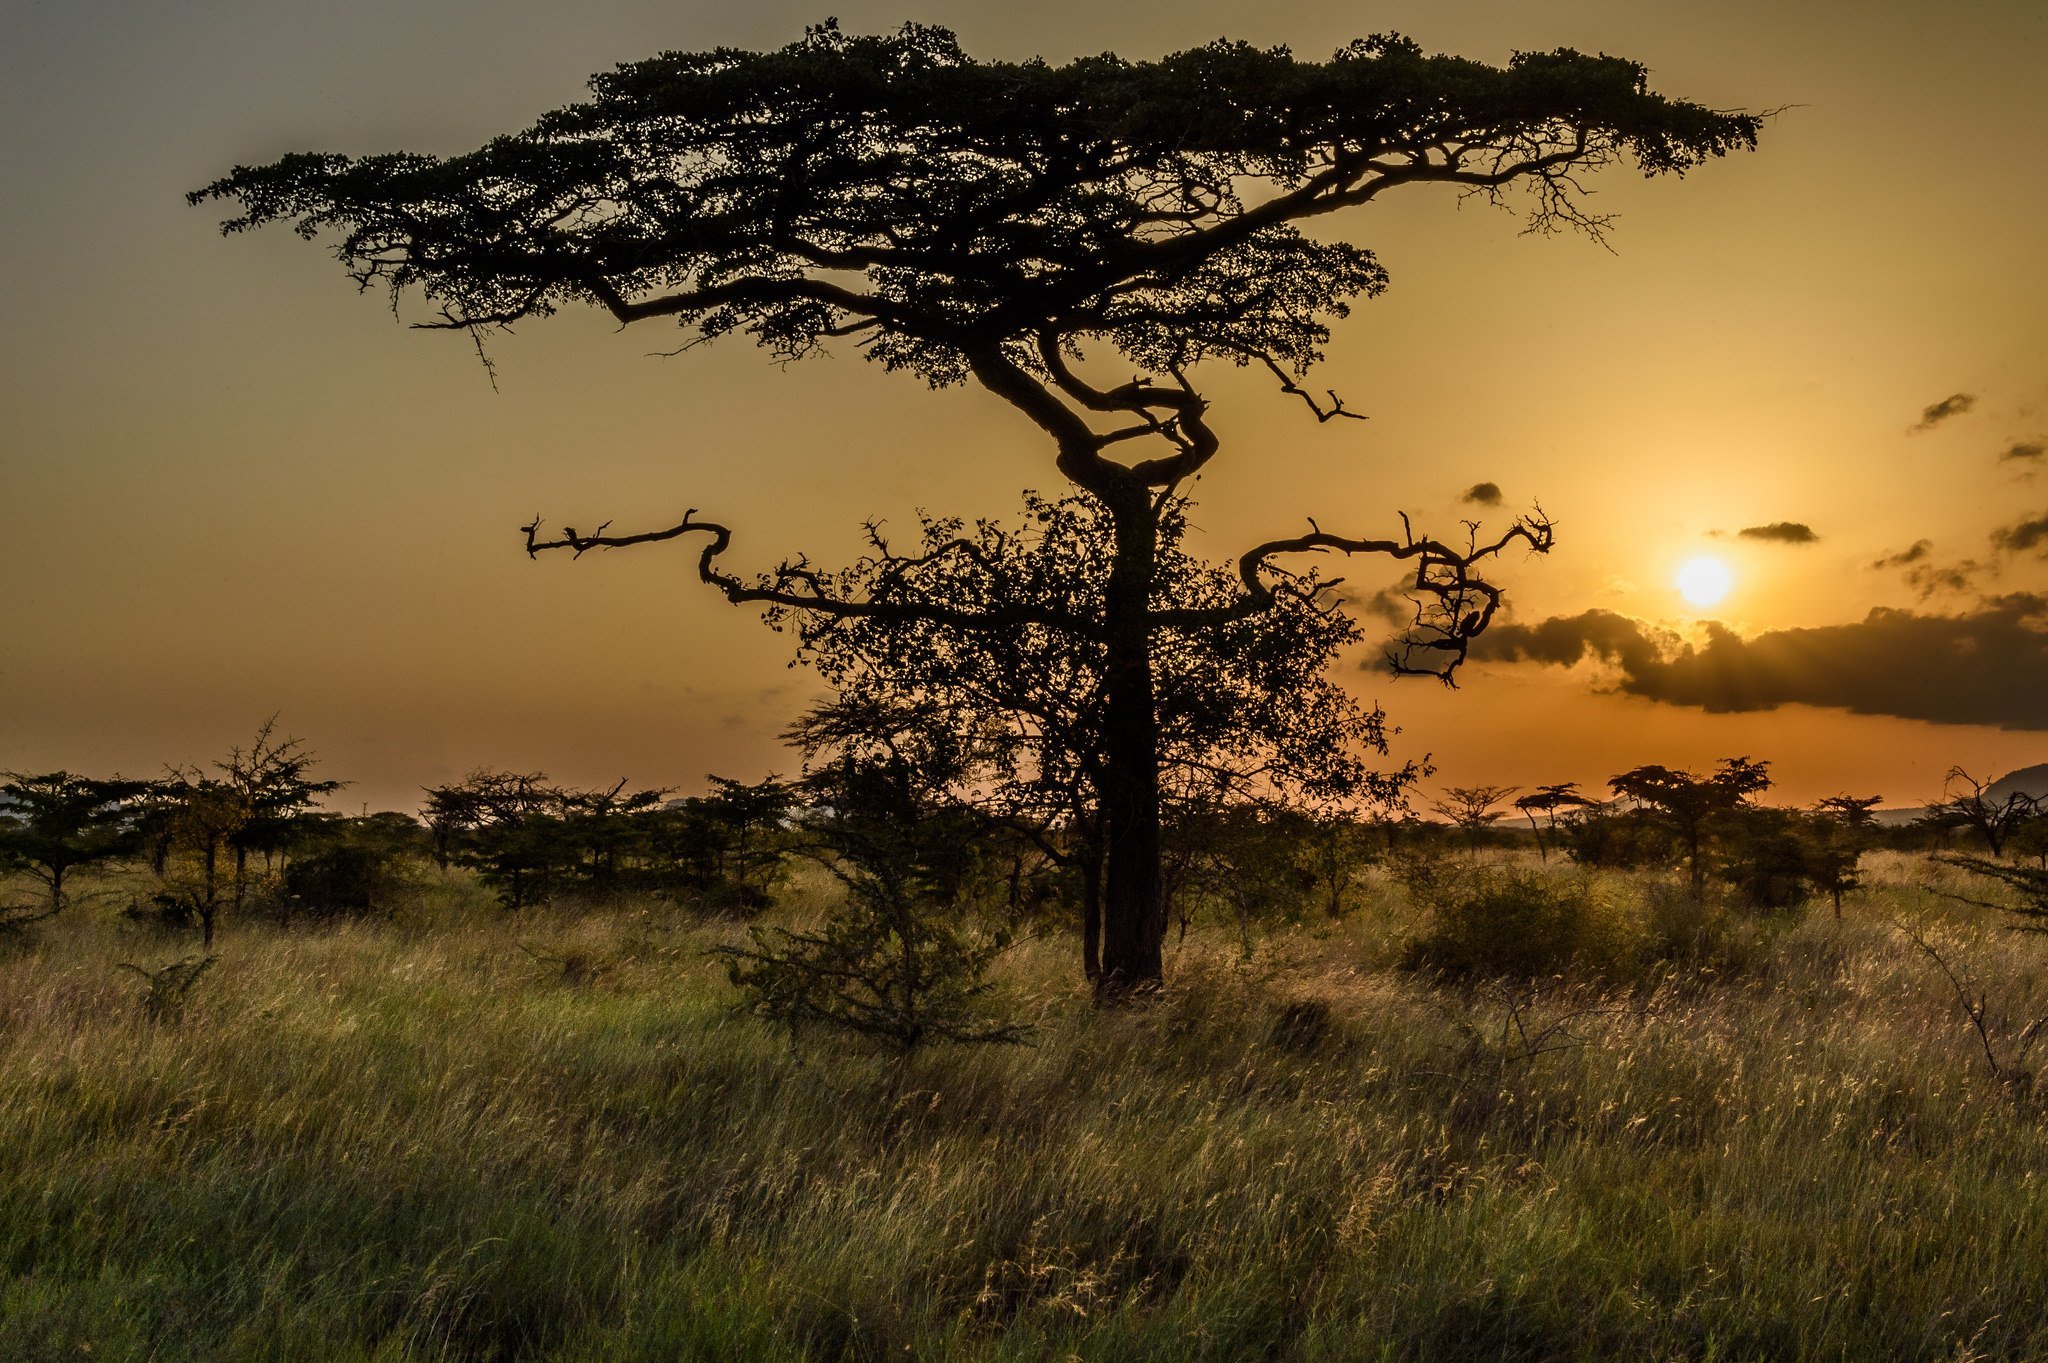 Природная зона северной америки саванна. Кения Саванна. Зимбабве Саванна. Серенгети Танзания дерево львица. Саванны Африки.